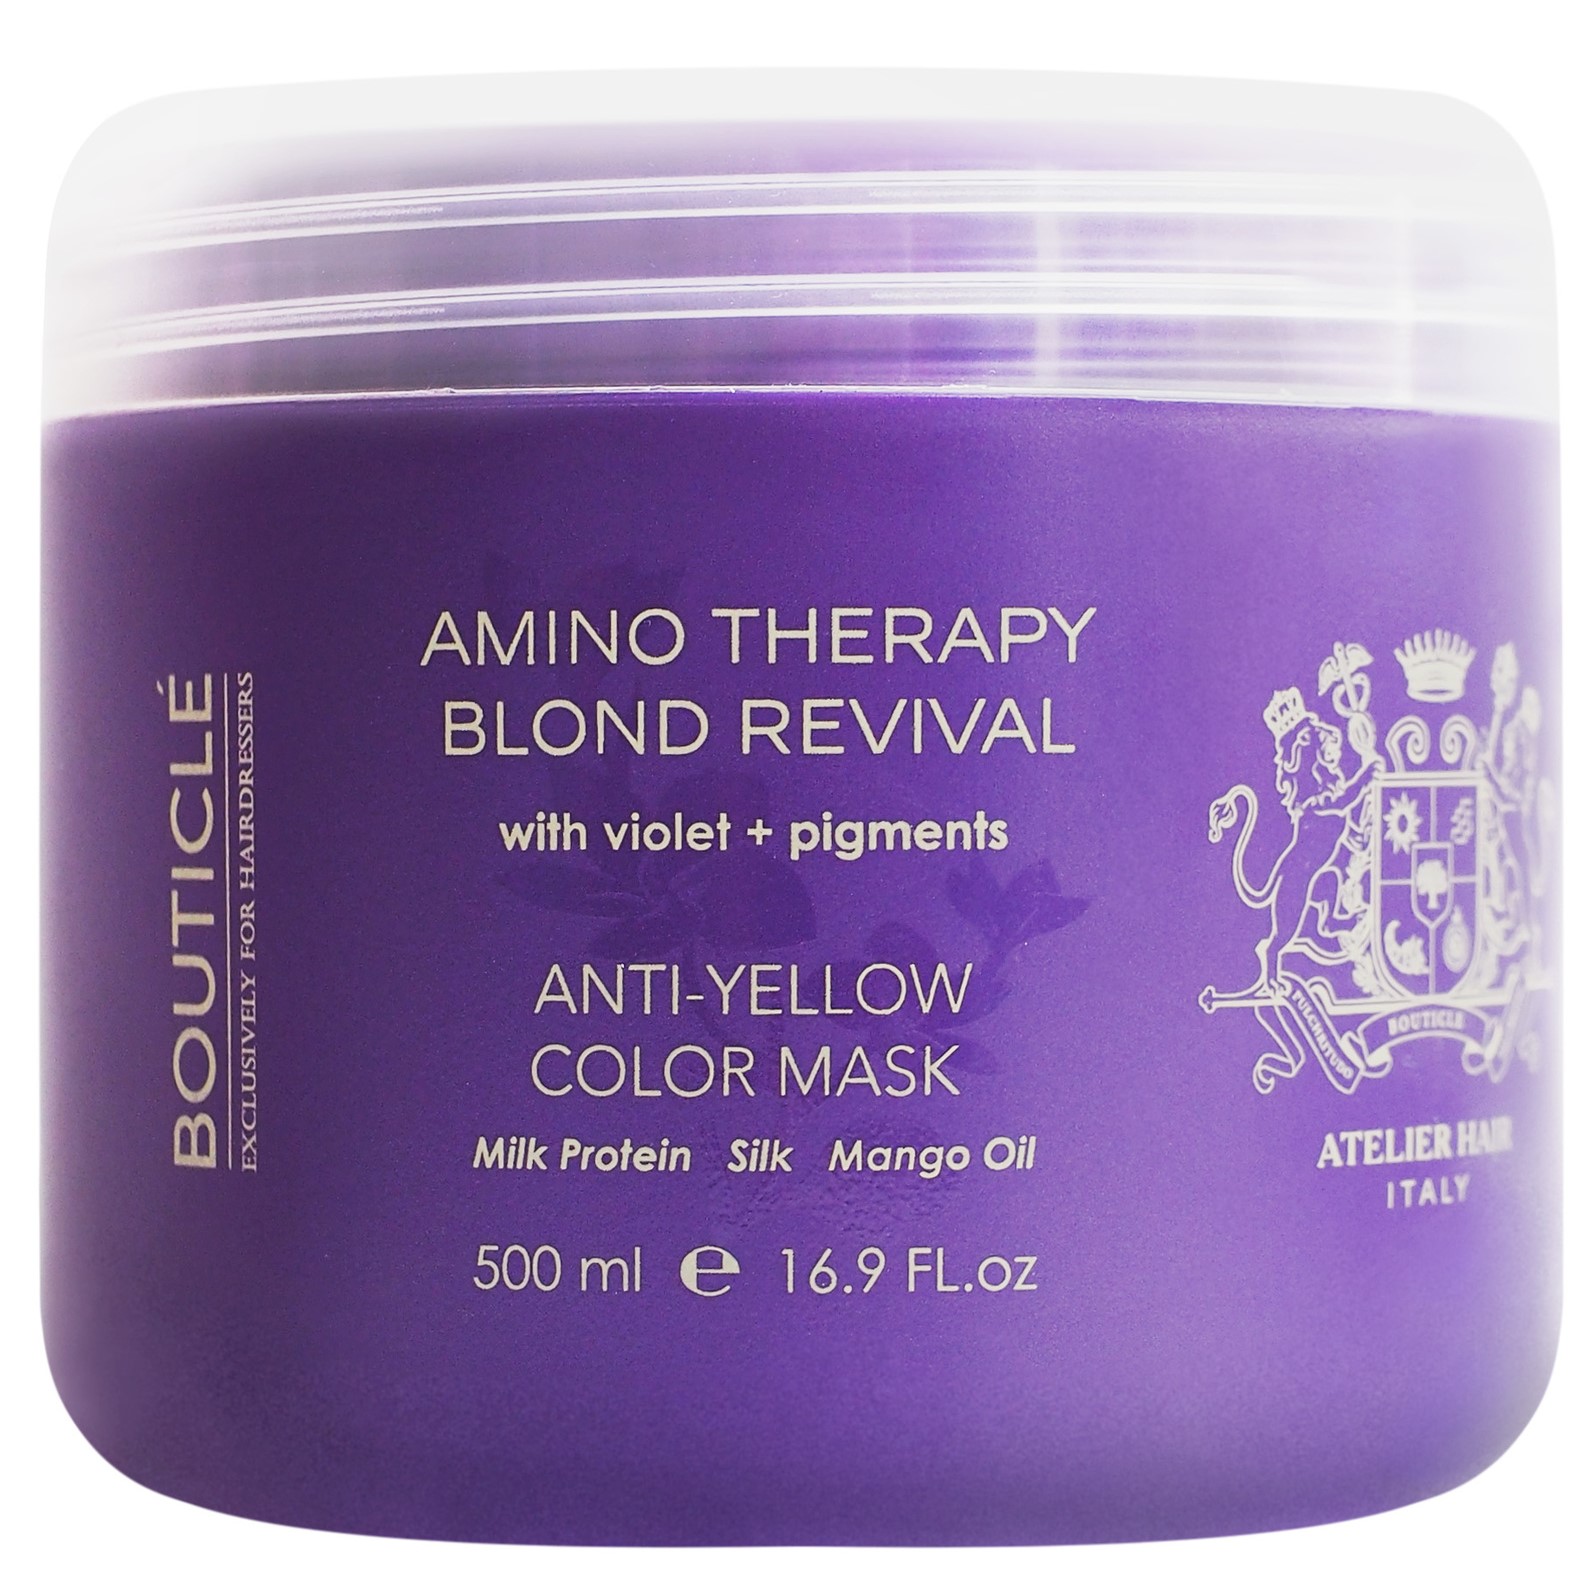 Восстанавливающая маска с анти-желтым эффектом Amino Therapy Blond Revival, 500 мл.